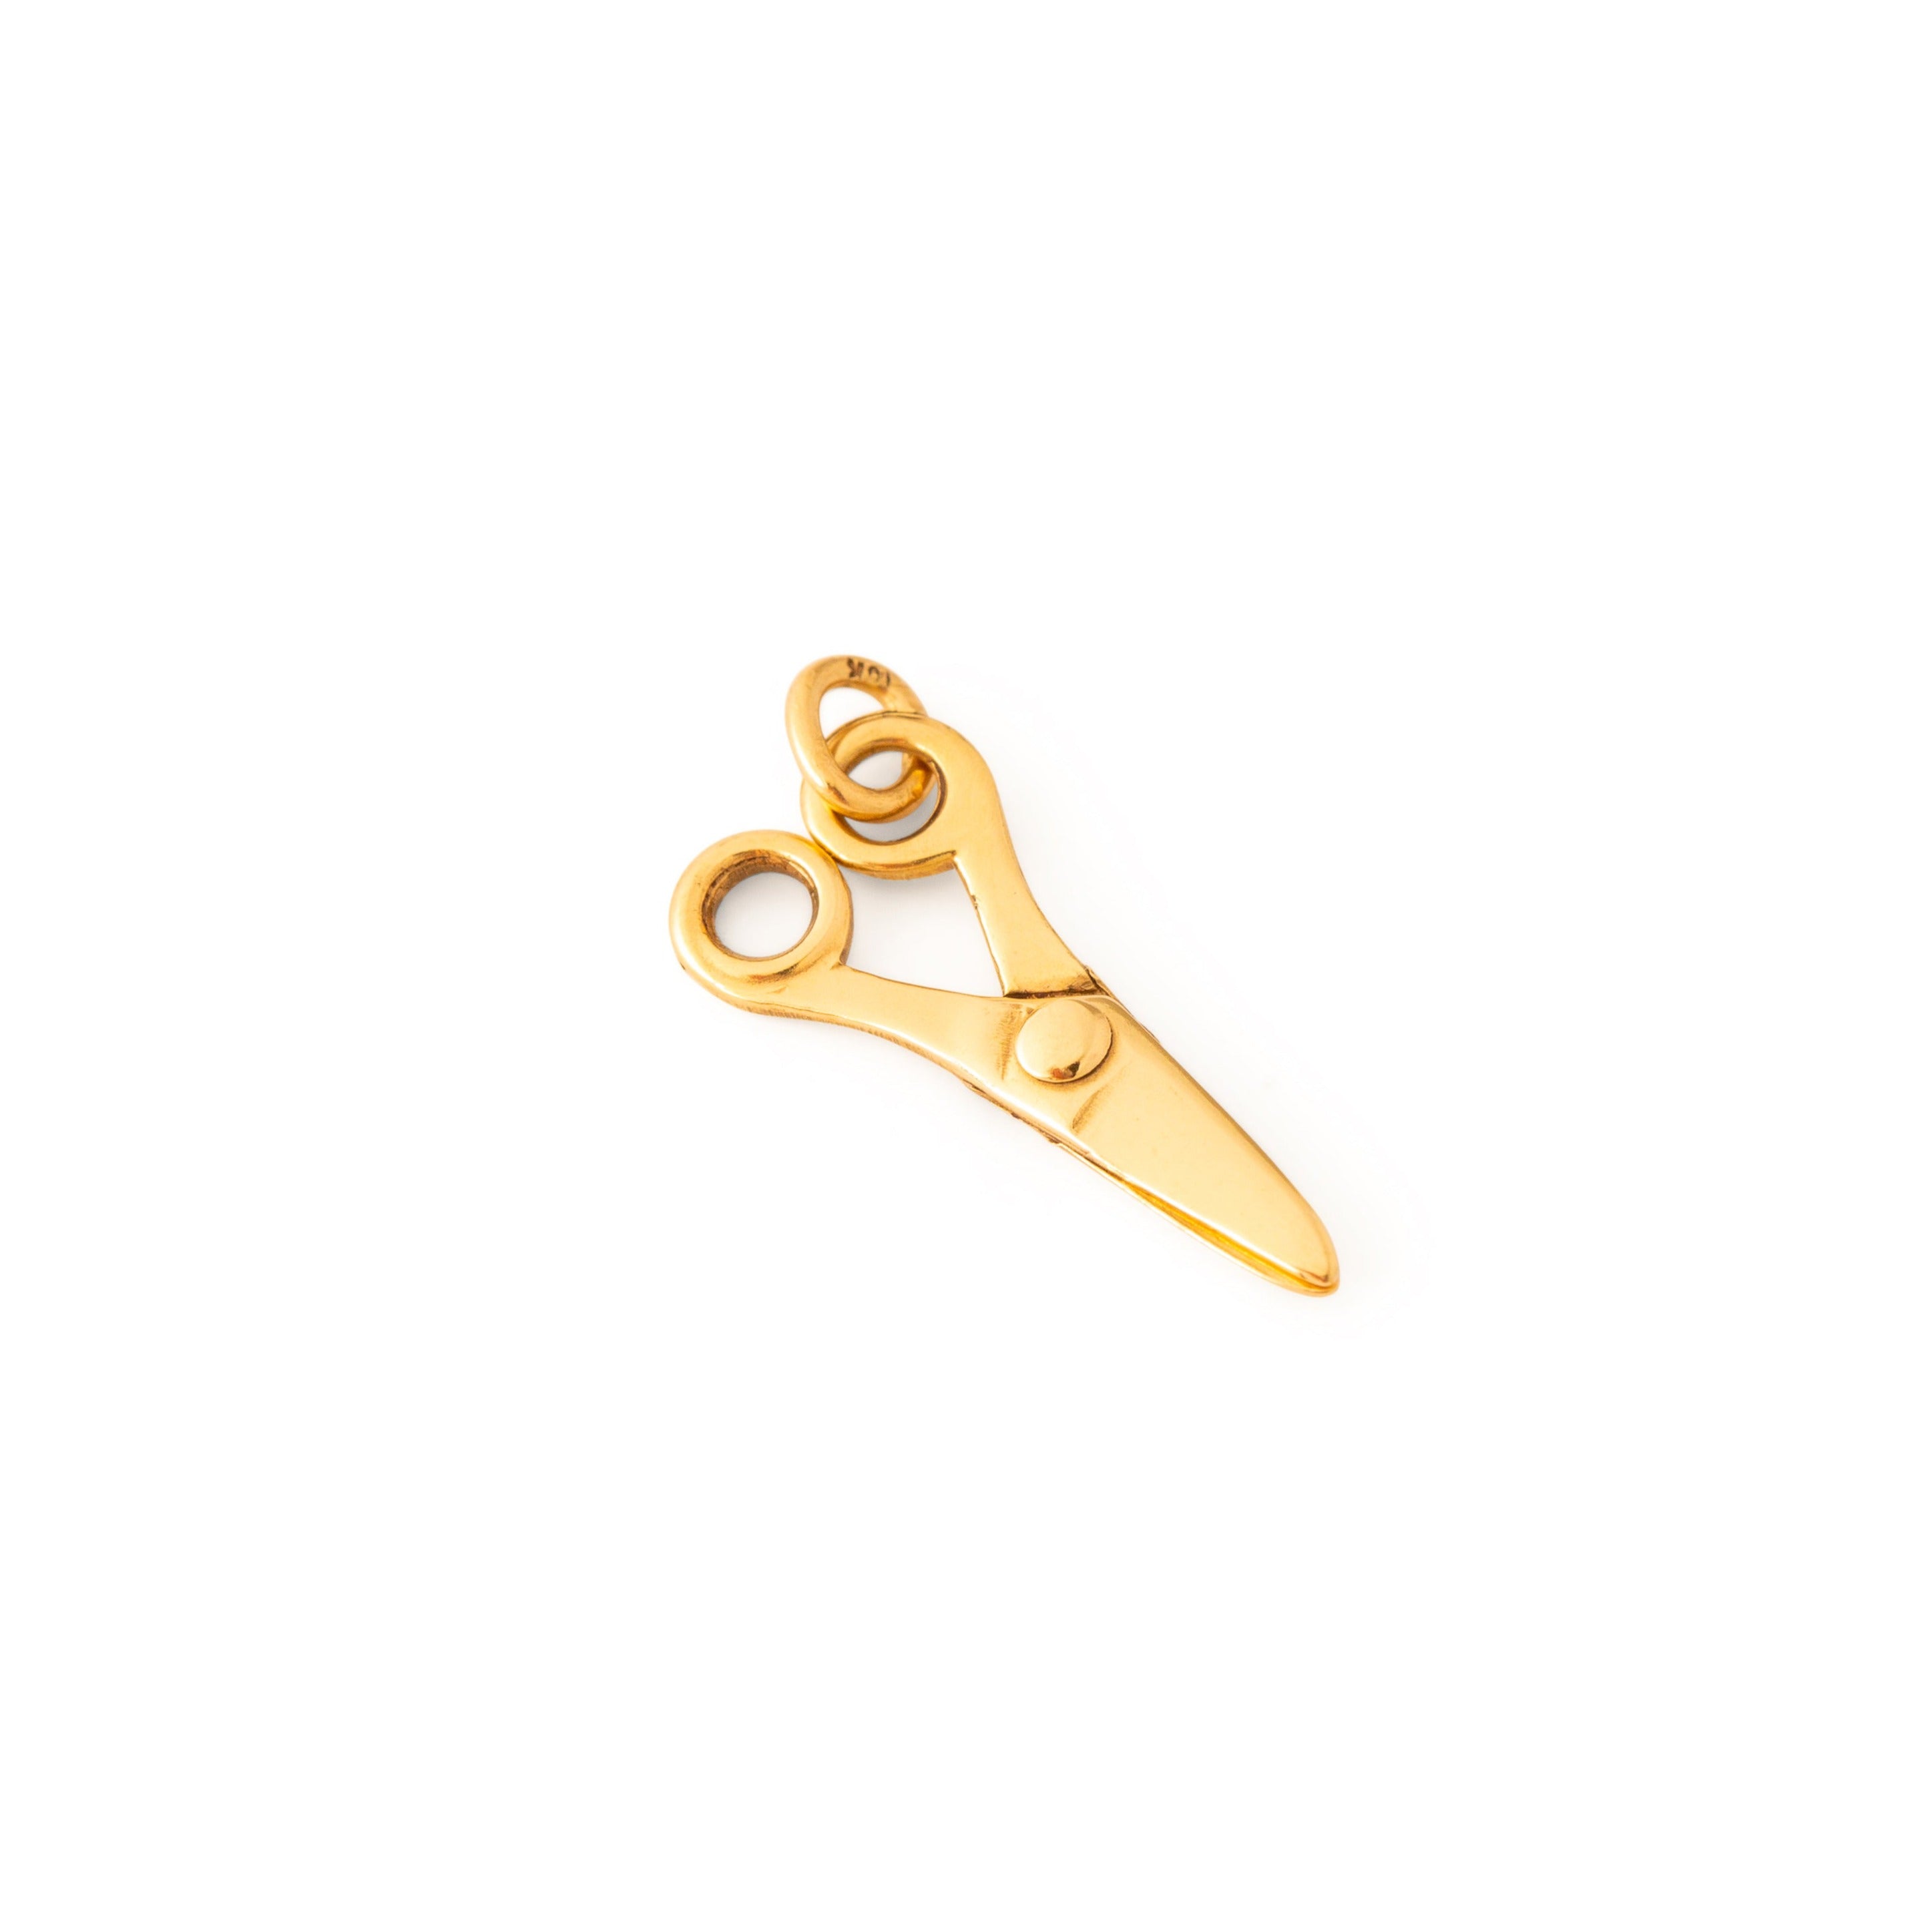 Movable Scissor 10k Gold Charm